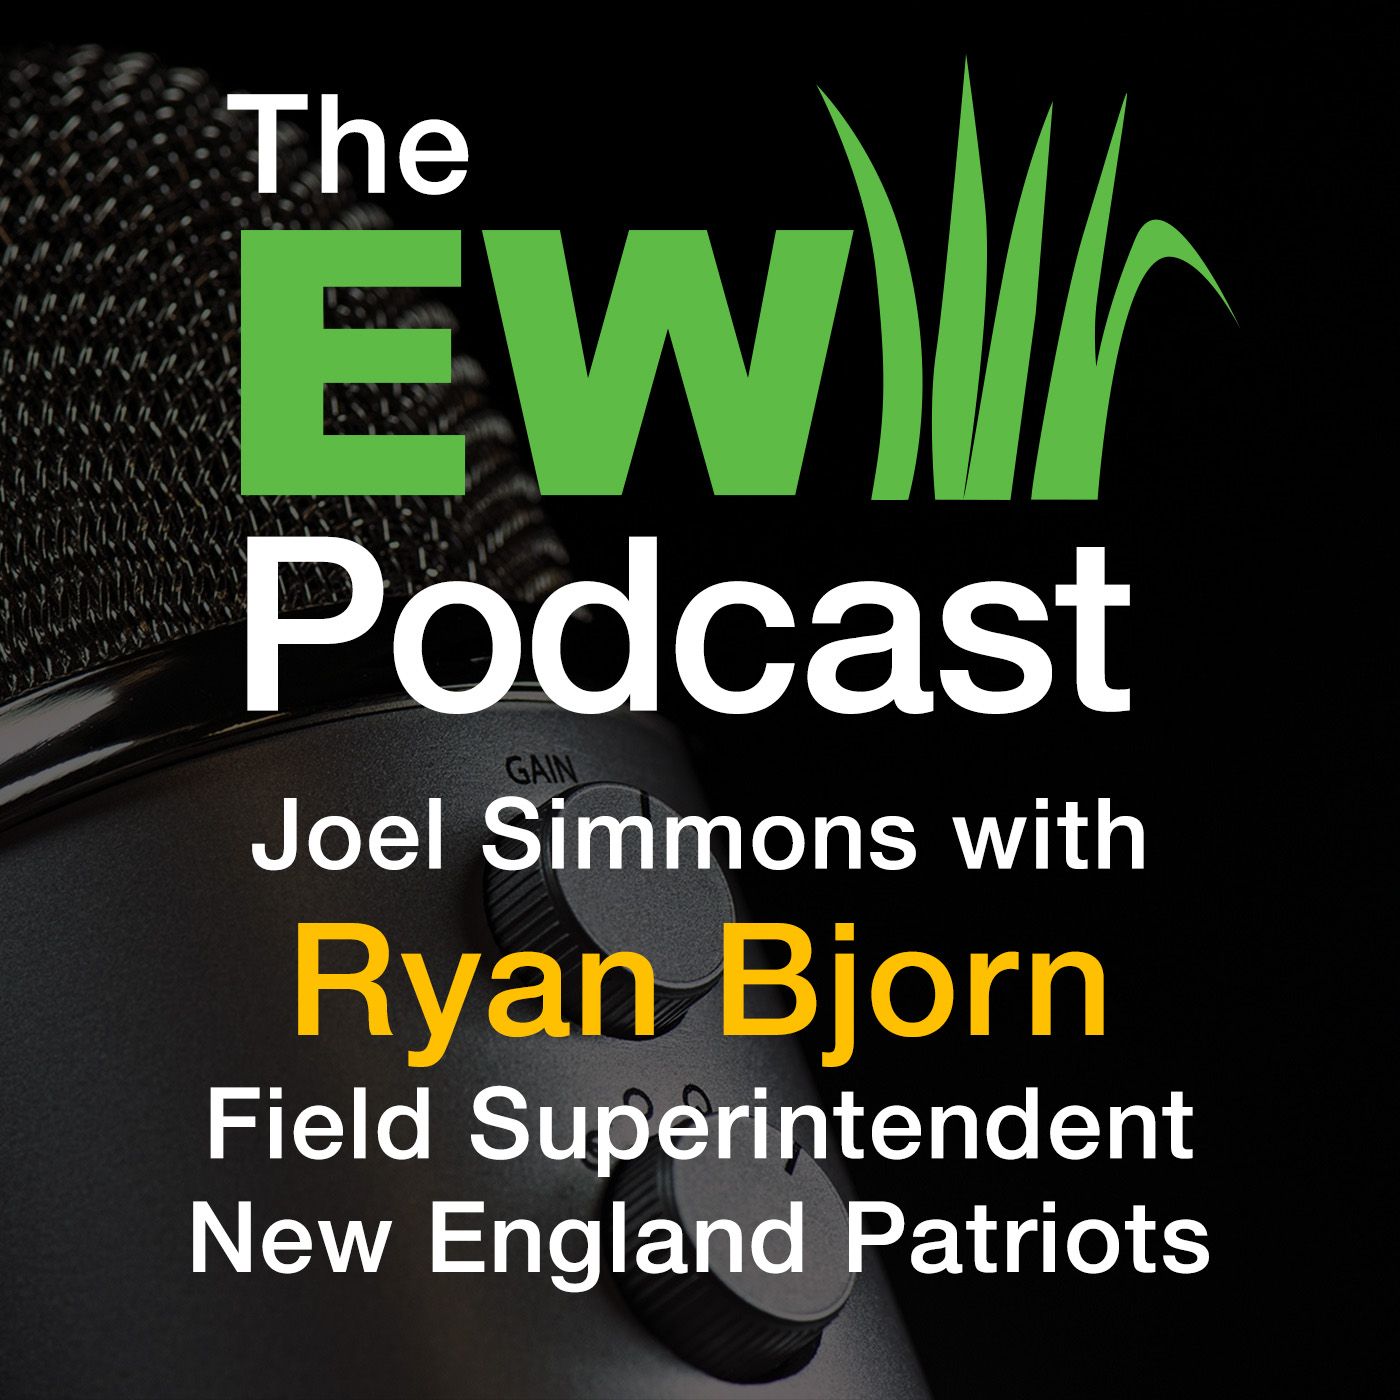 The EW Podcast - Joel Simmons with Ryan Bjorn - Field Superintendent, New England Patriots